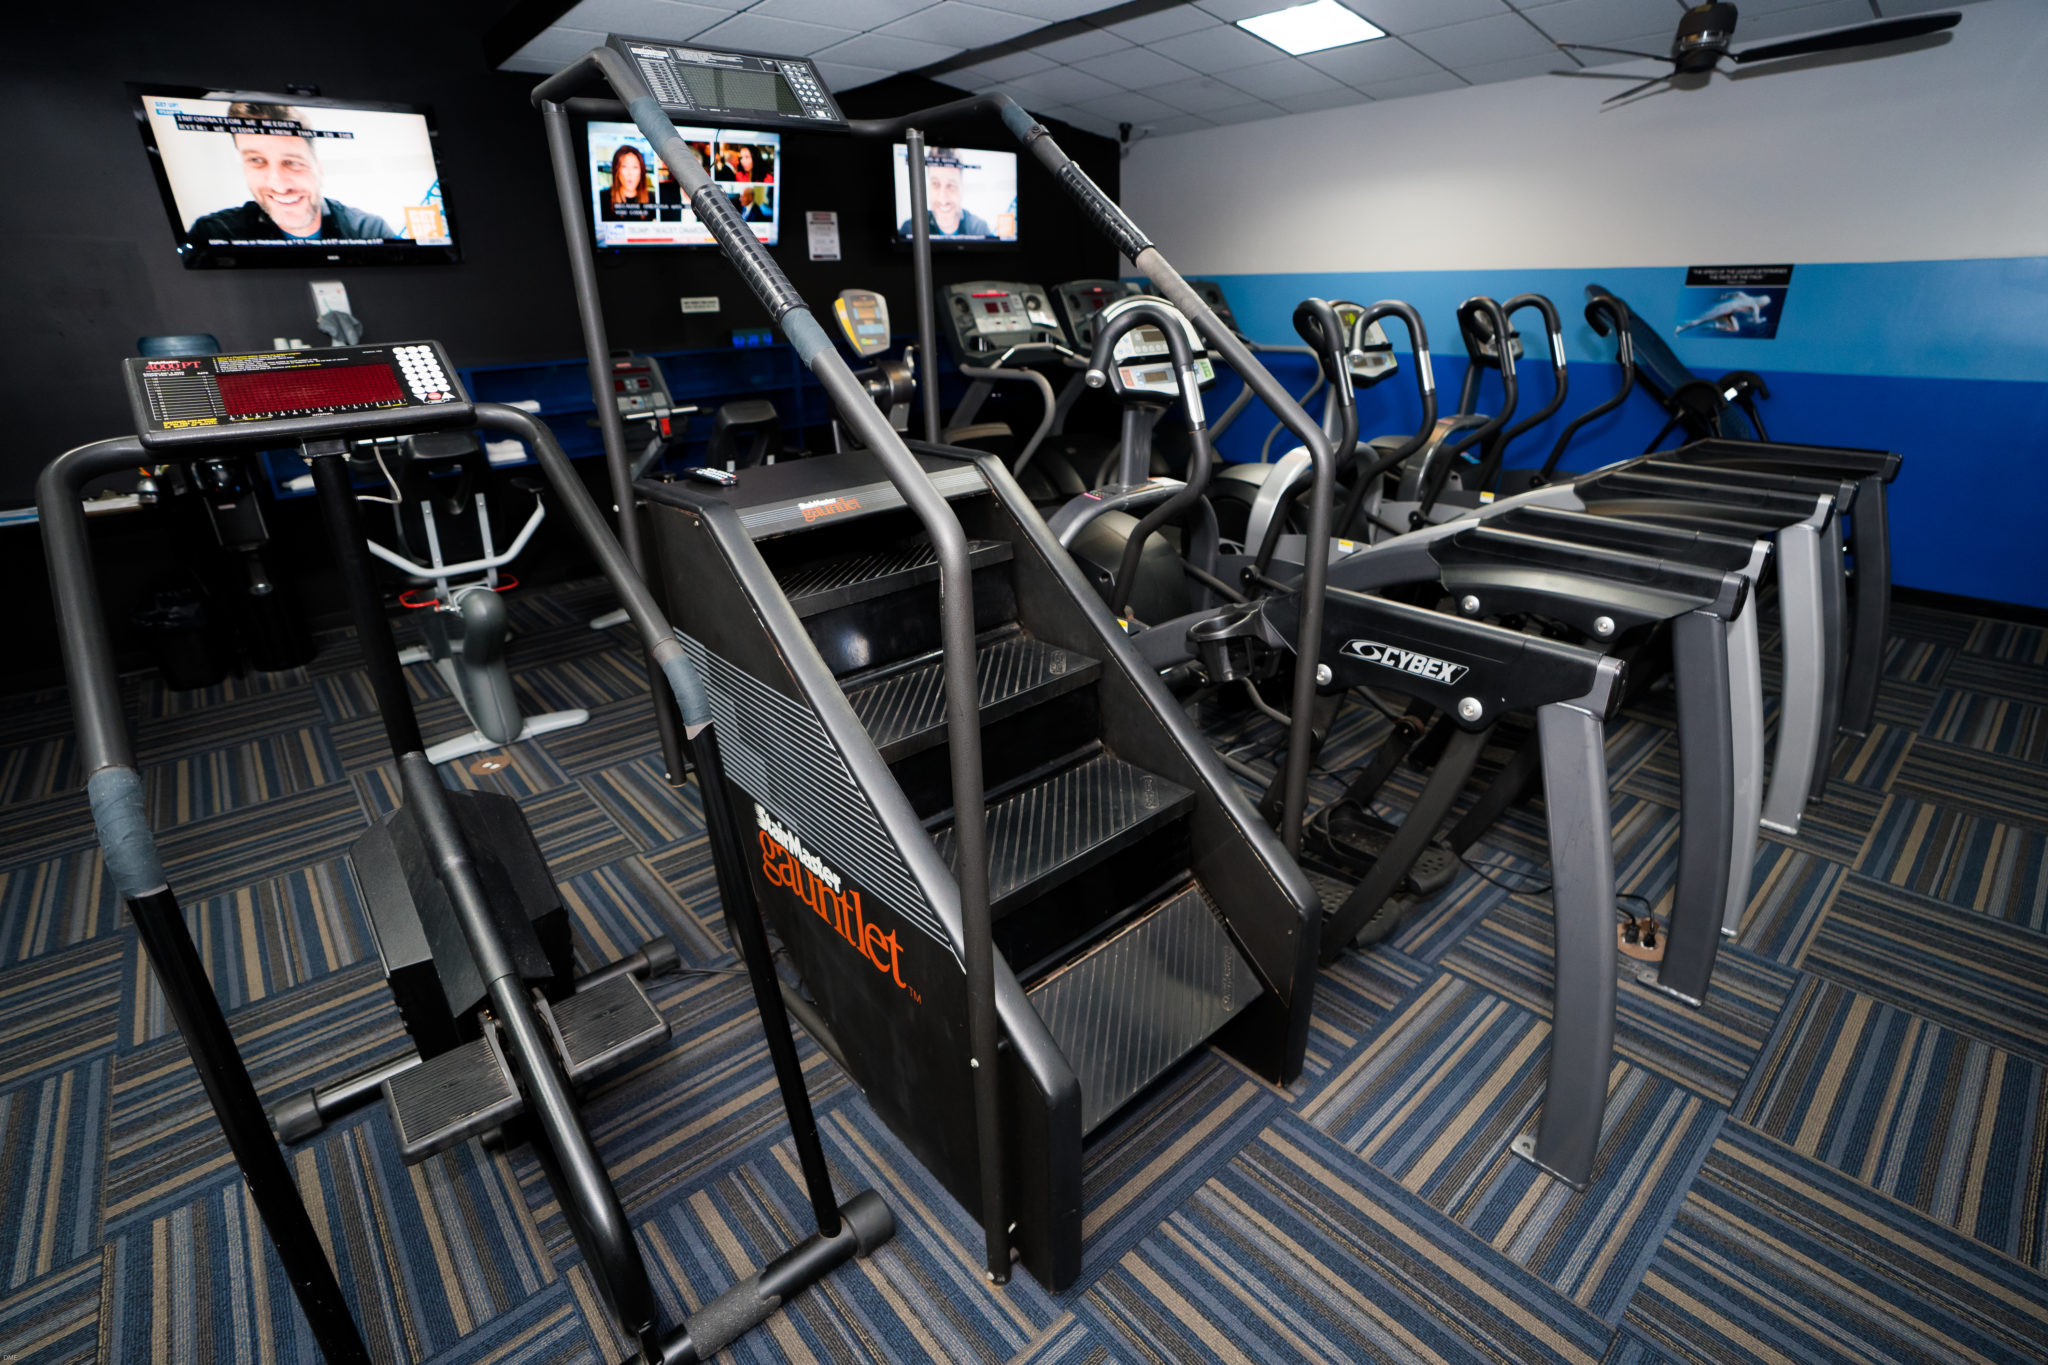 Cardio equipment in fitness center